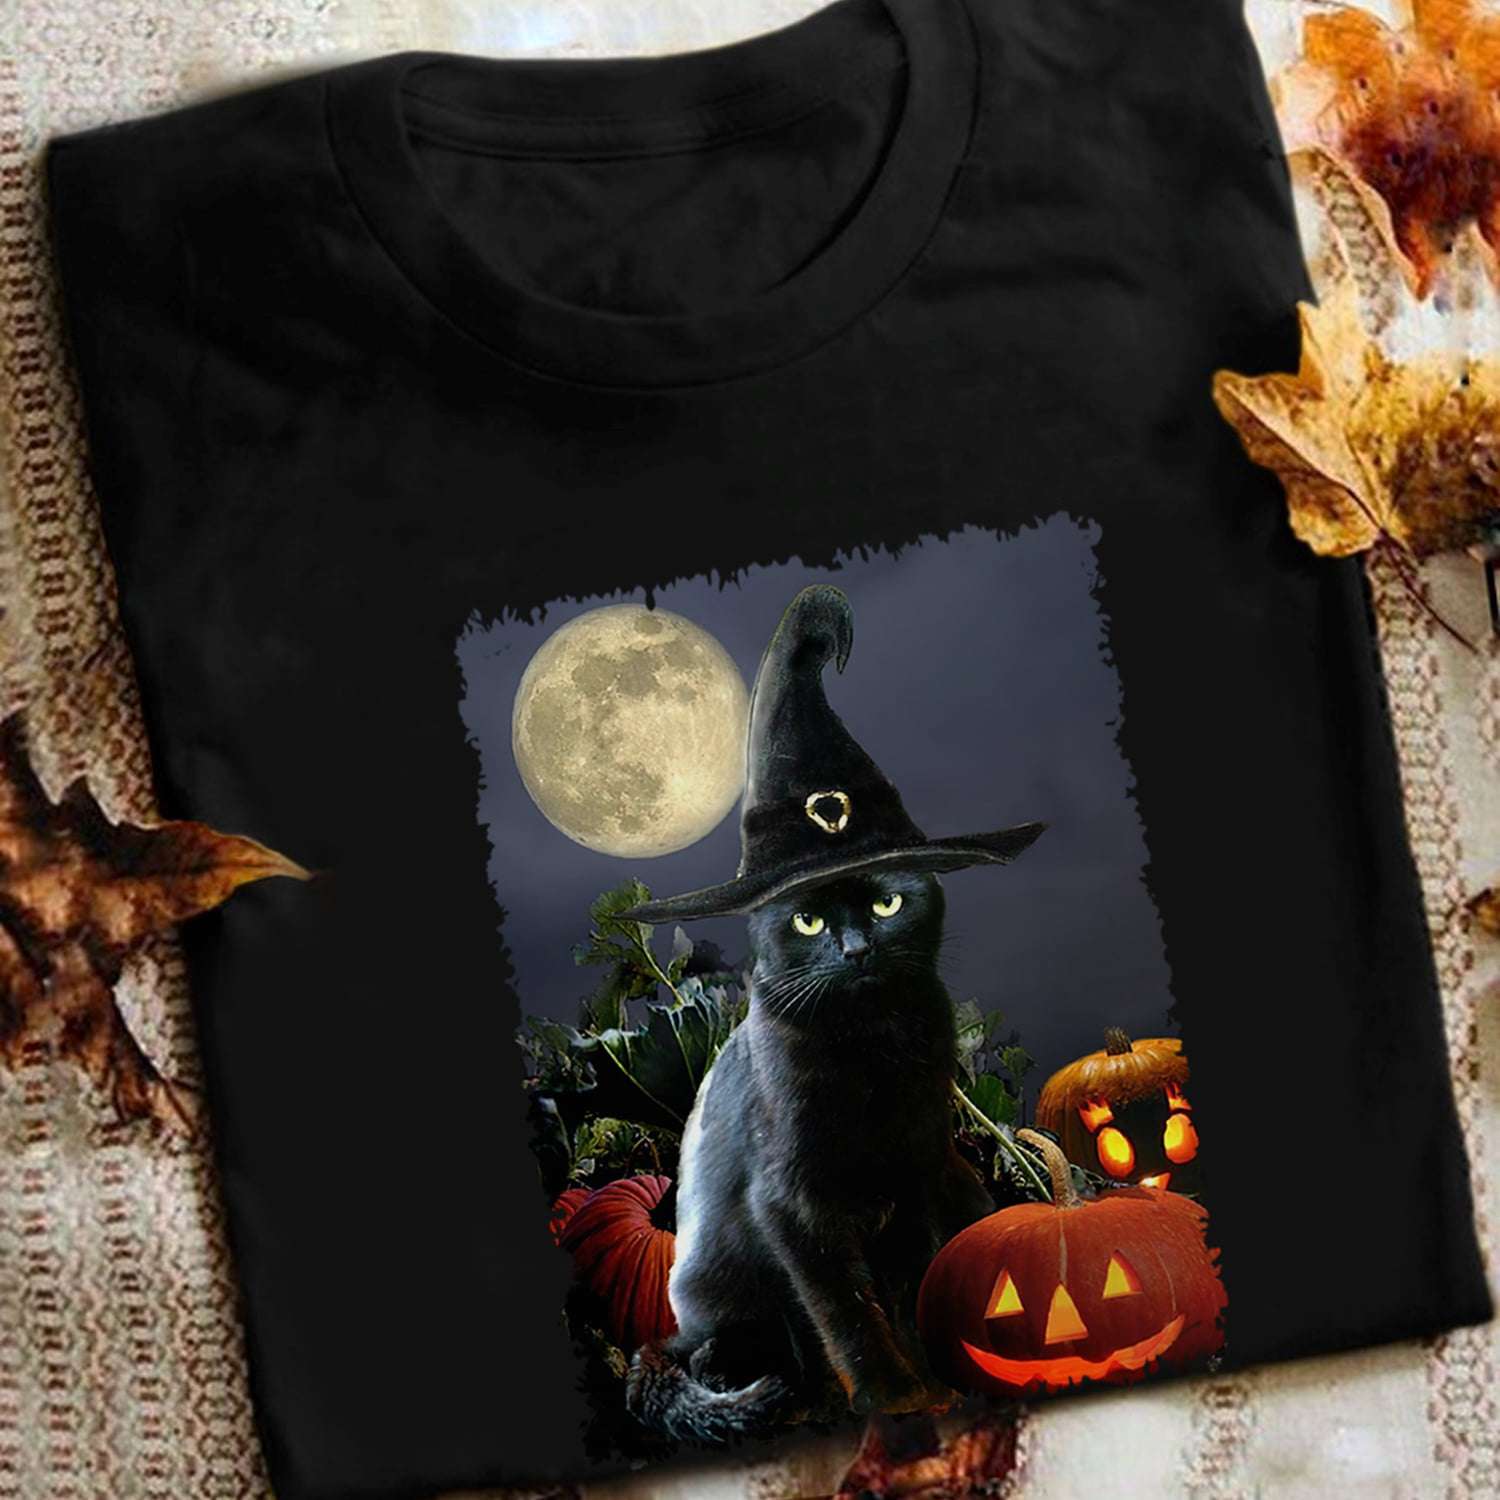 Witch Balck Cat, Halloween Costume - Halloween Pumpkin, Halloween Night